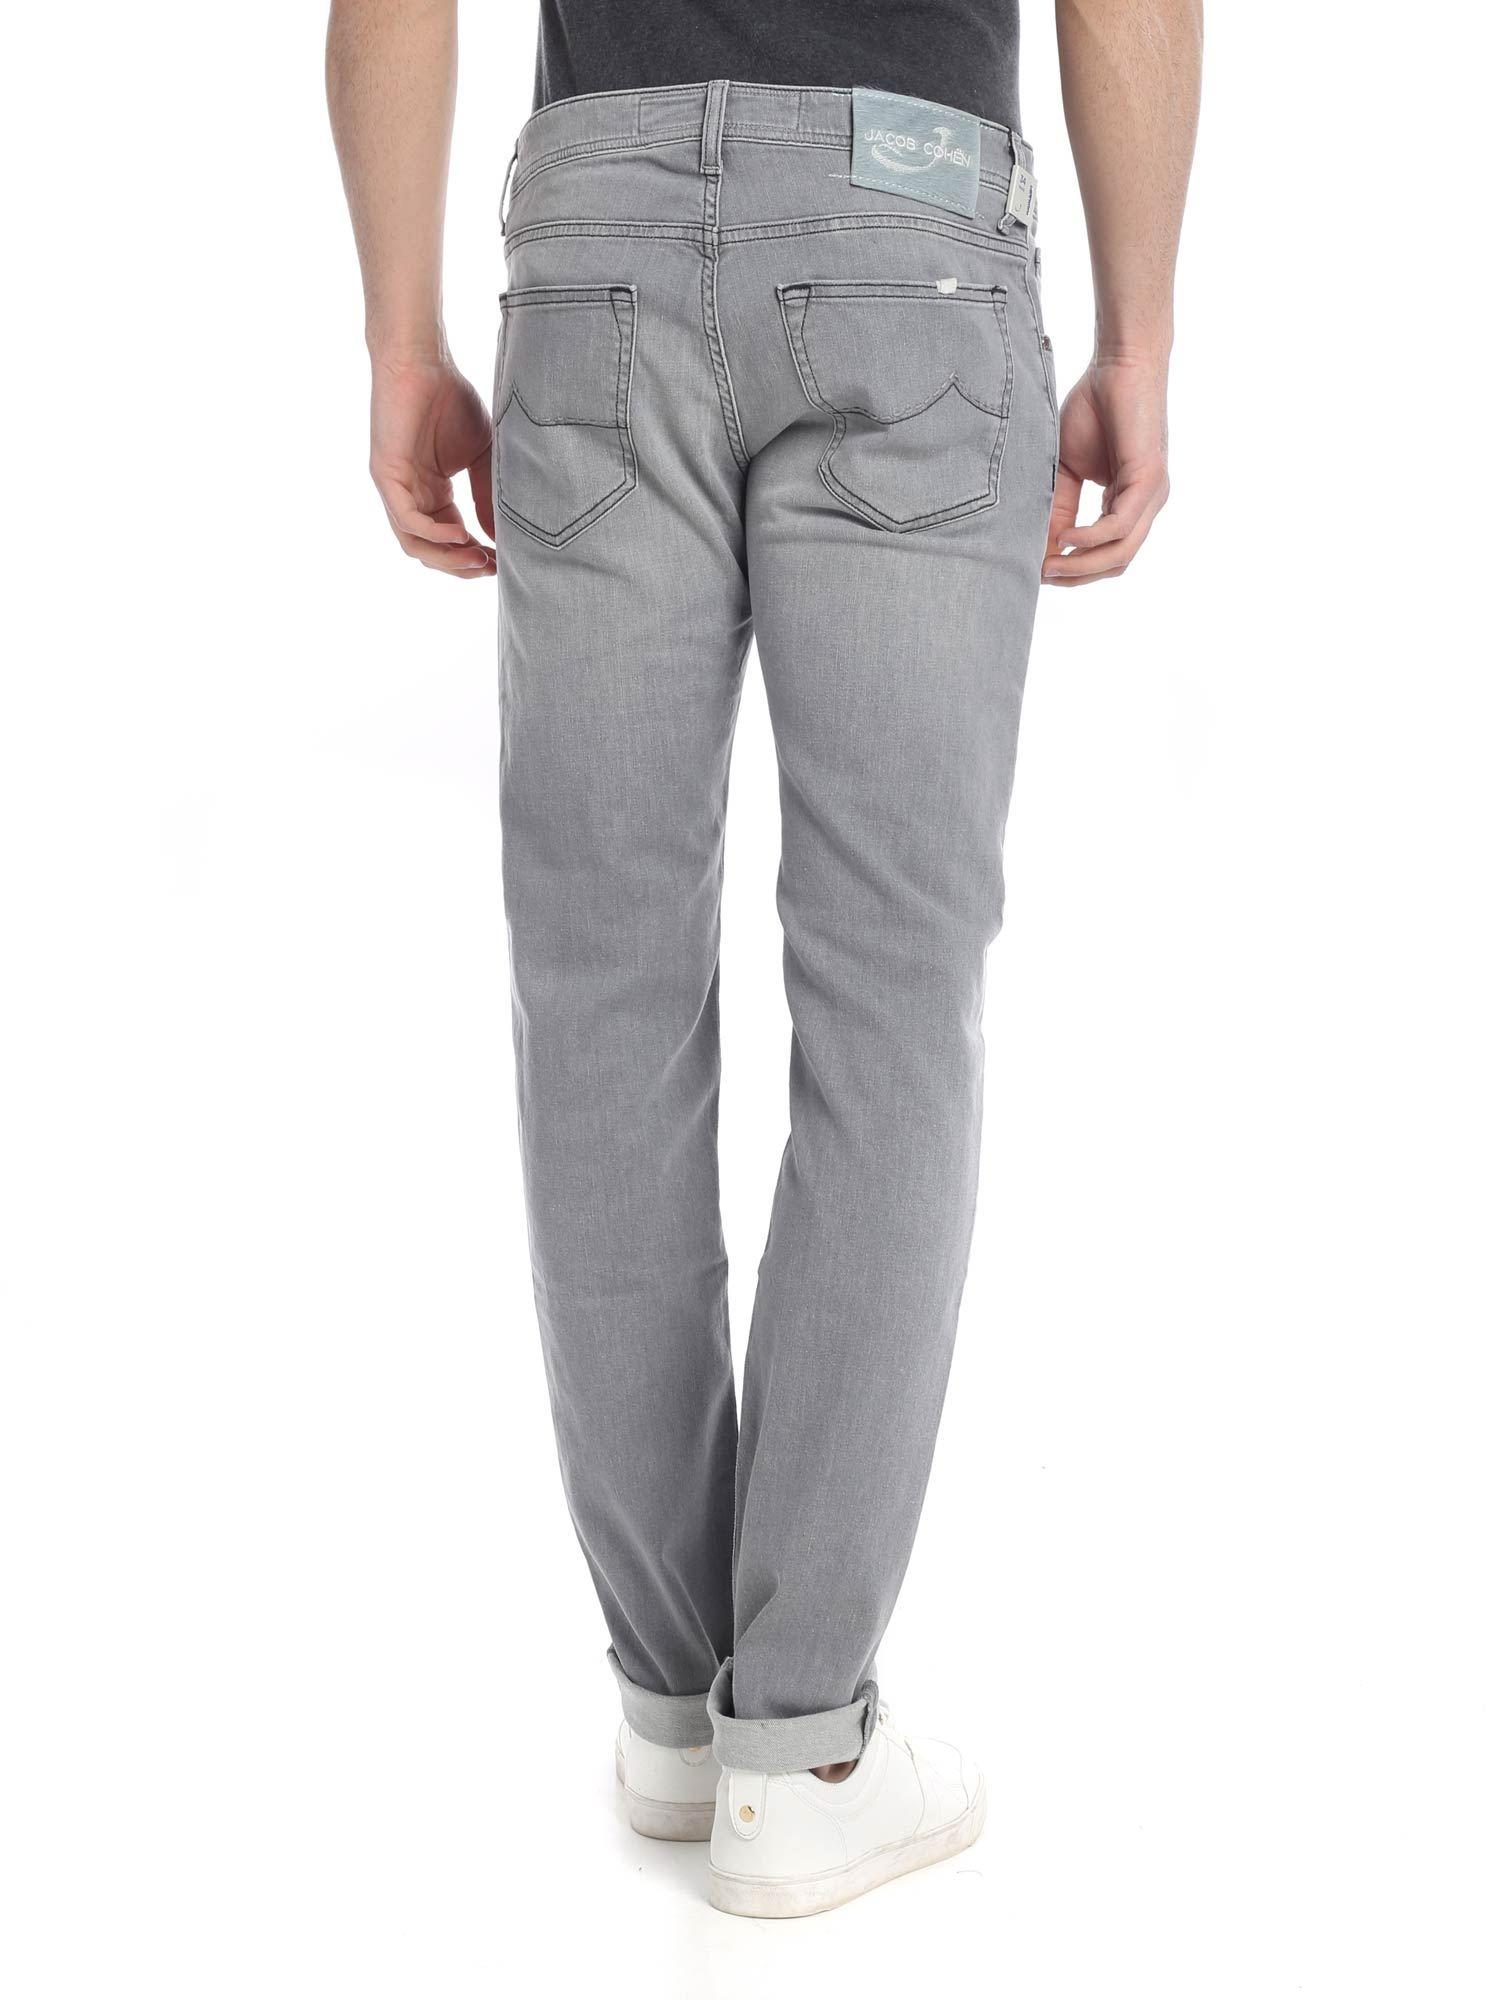 Jacob Cohen Denim Grey 5-pocket Jeans in Gray for Men - Lyst